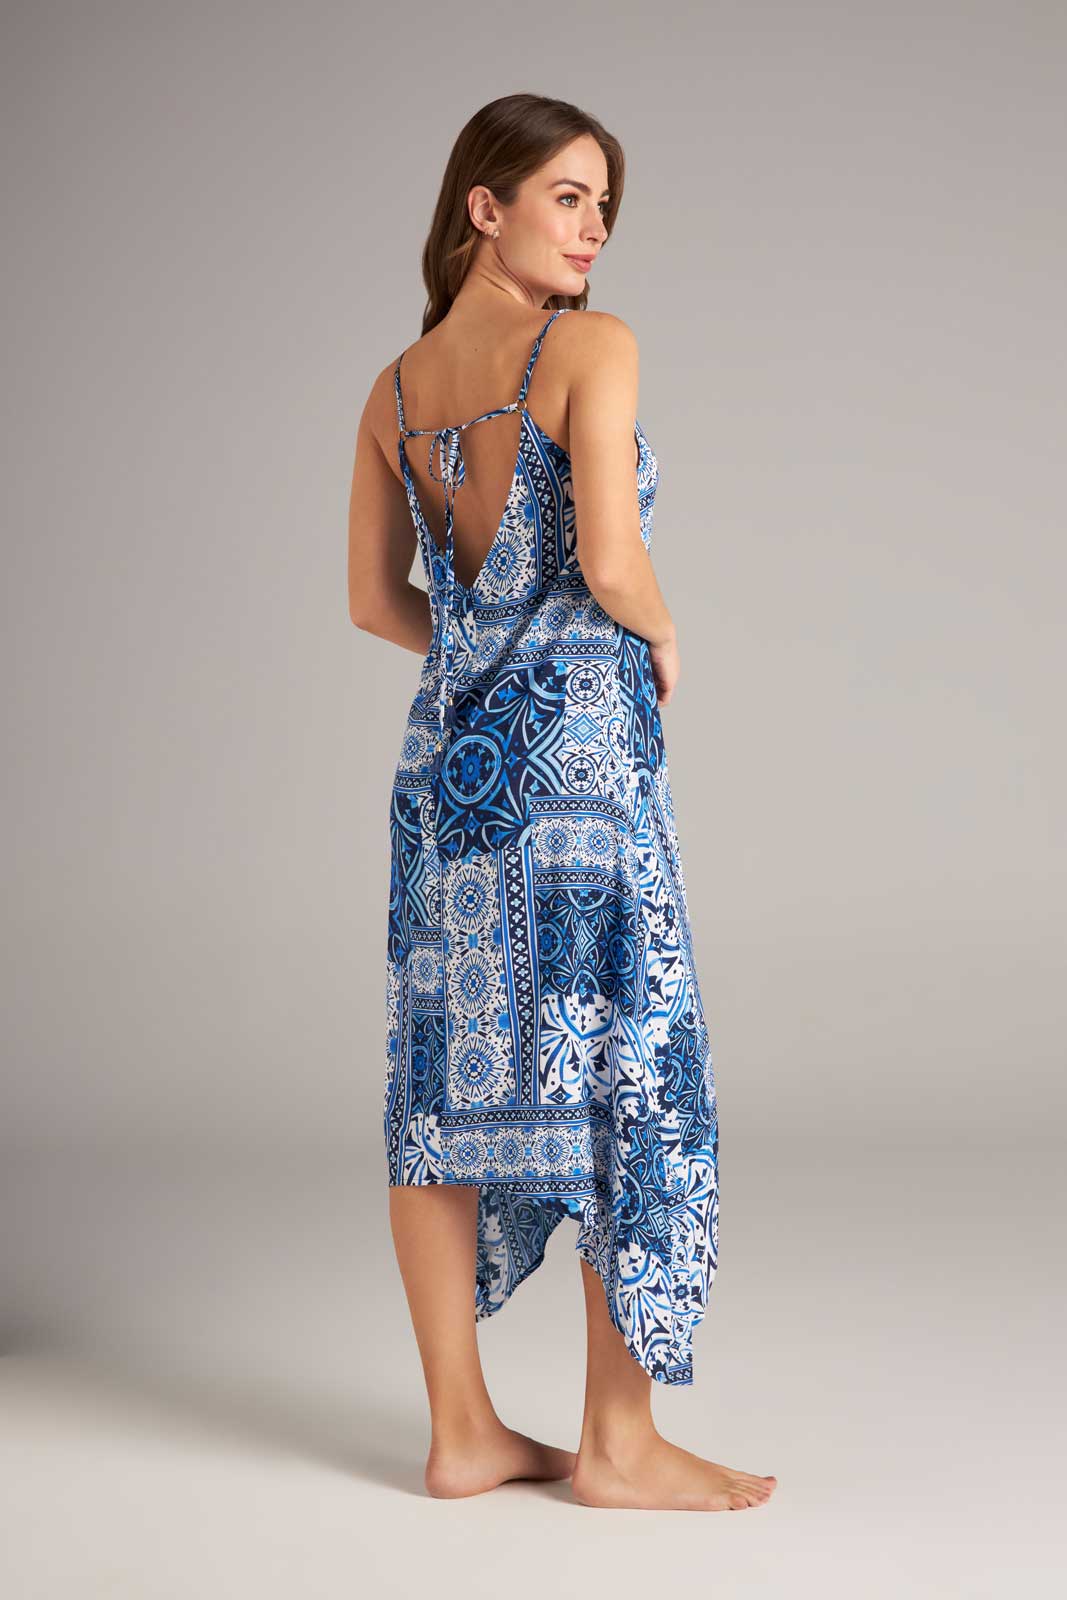 Jantzen: Moroccan Tiles Maggie Scarf Dress